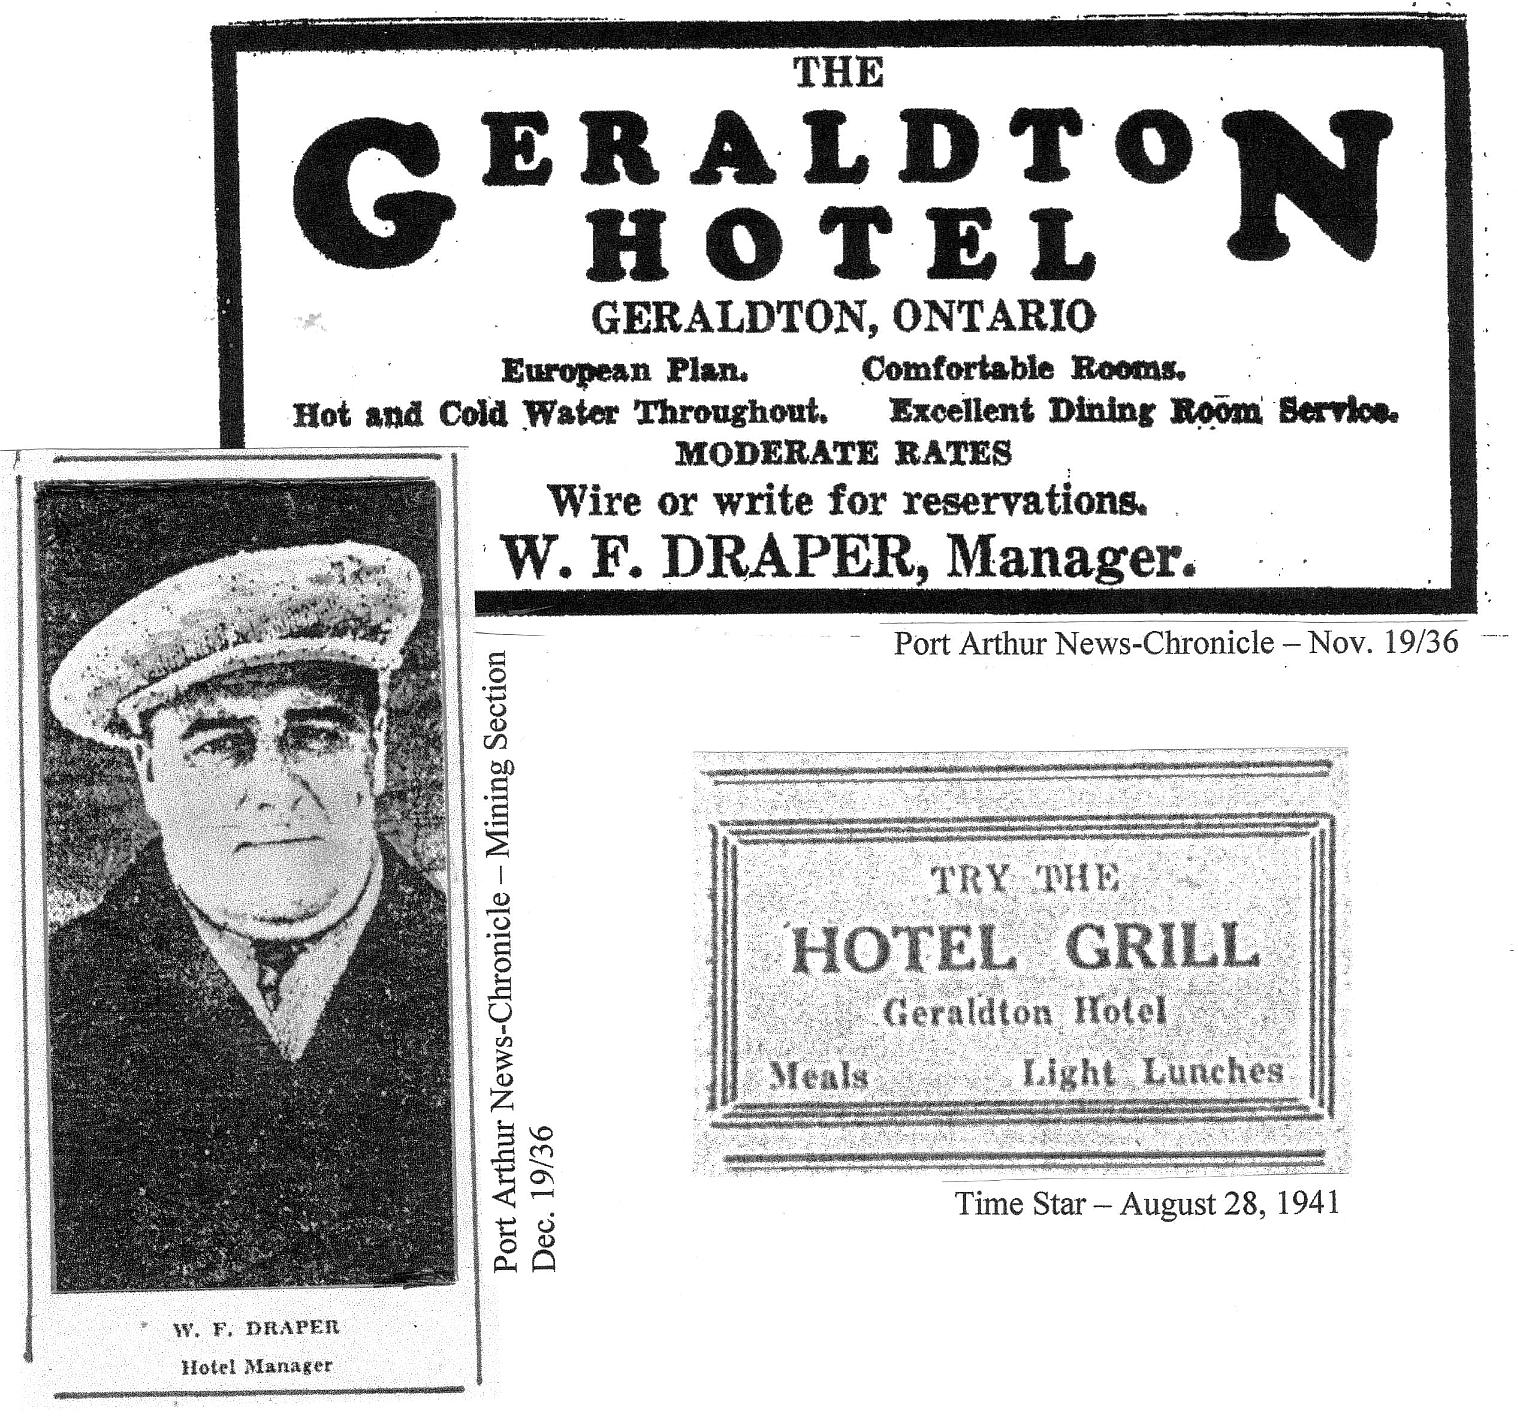 Geraldton Hotel, advertisements